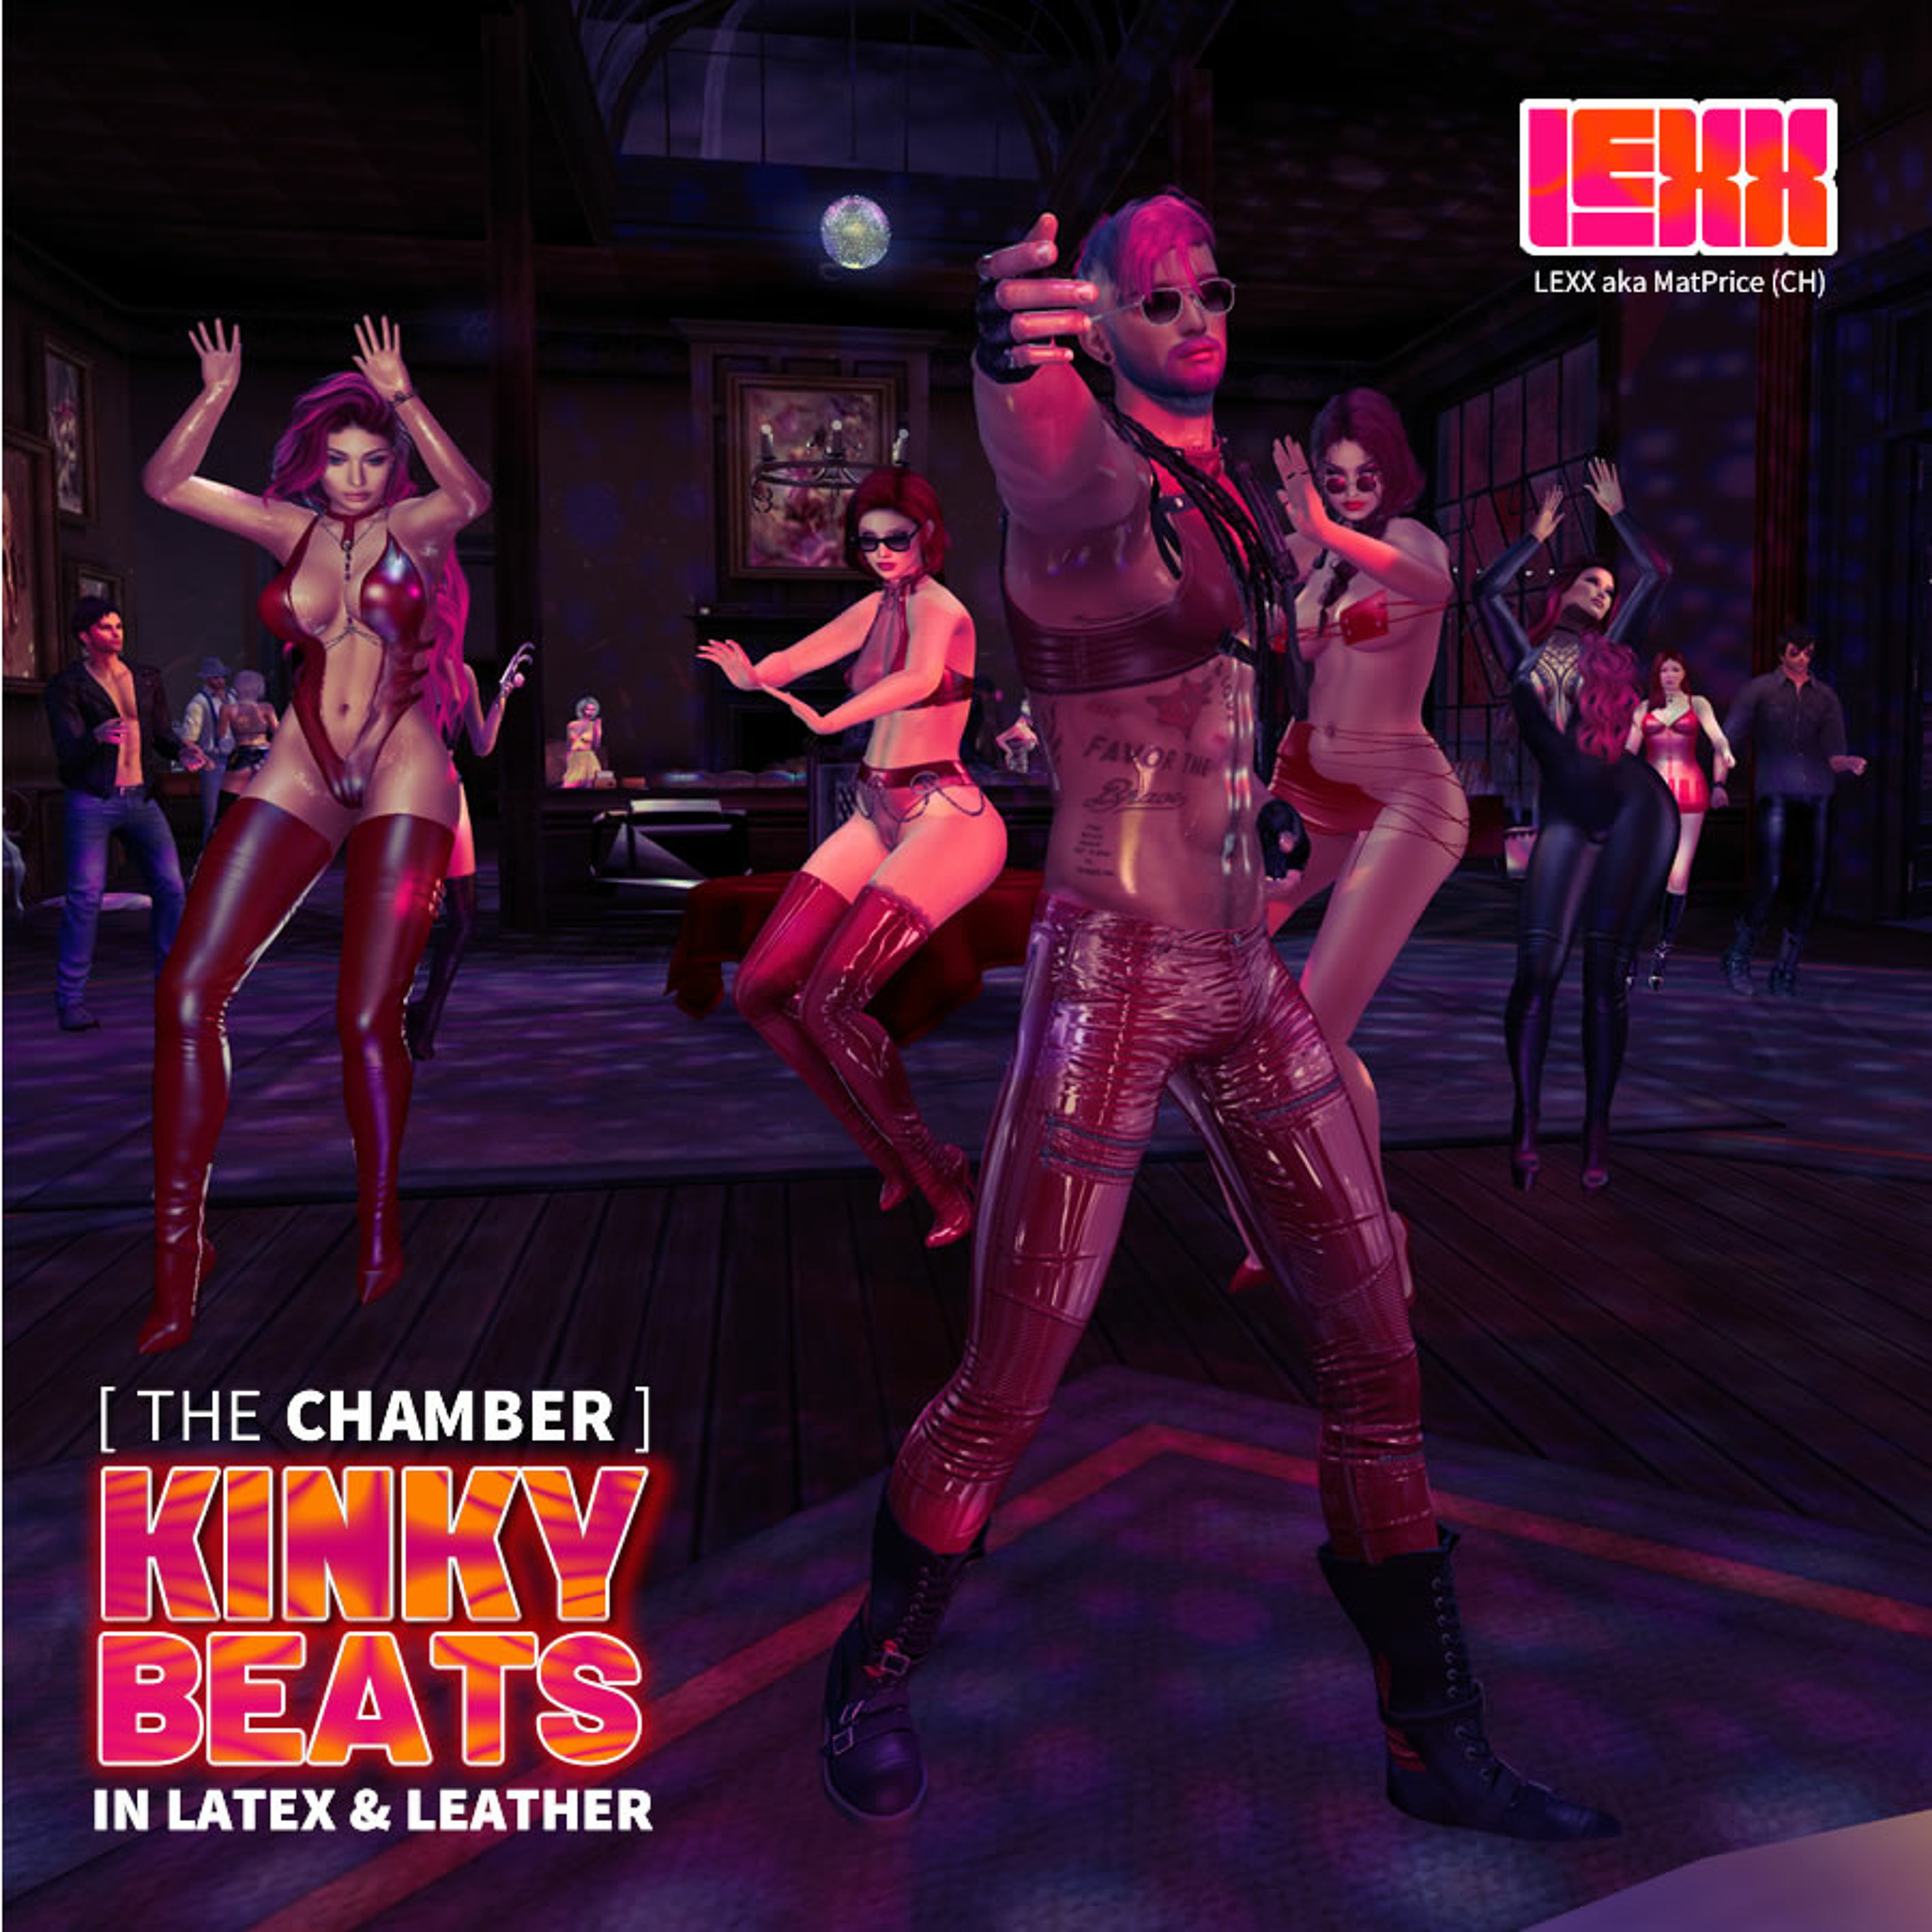 Kinky Beats Latex & Leather